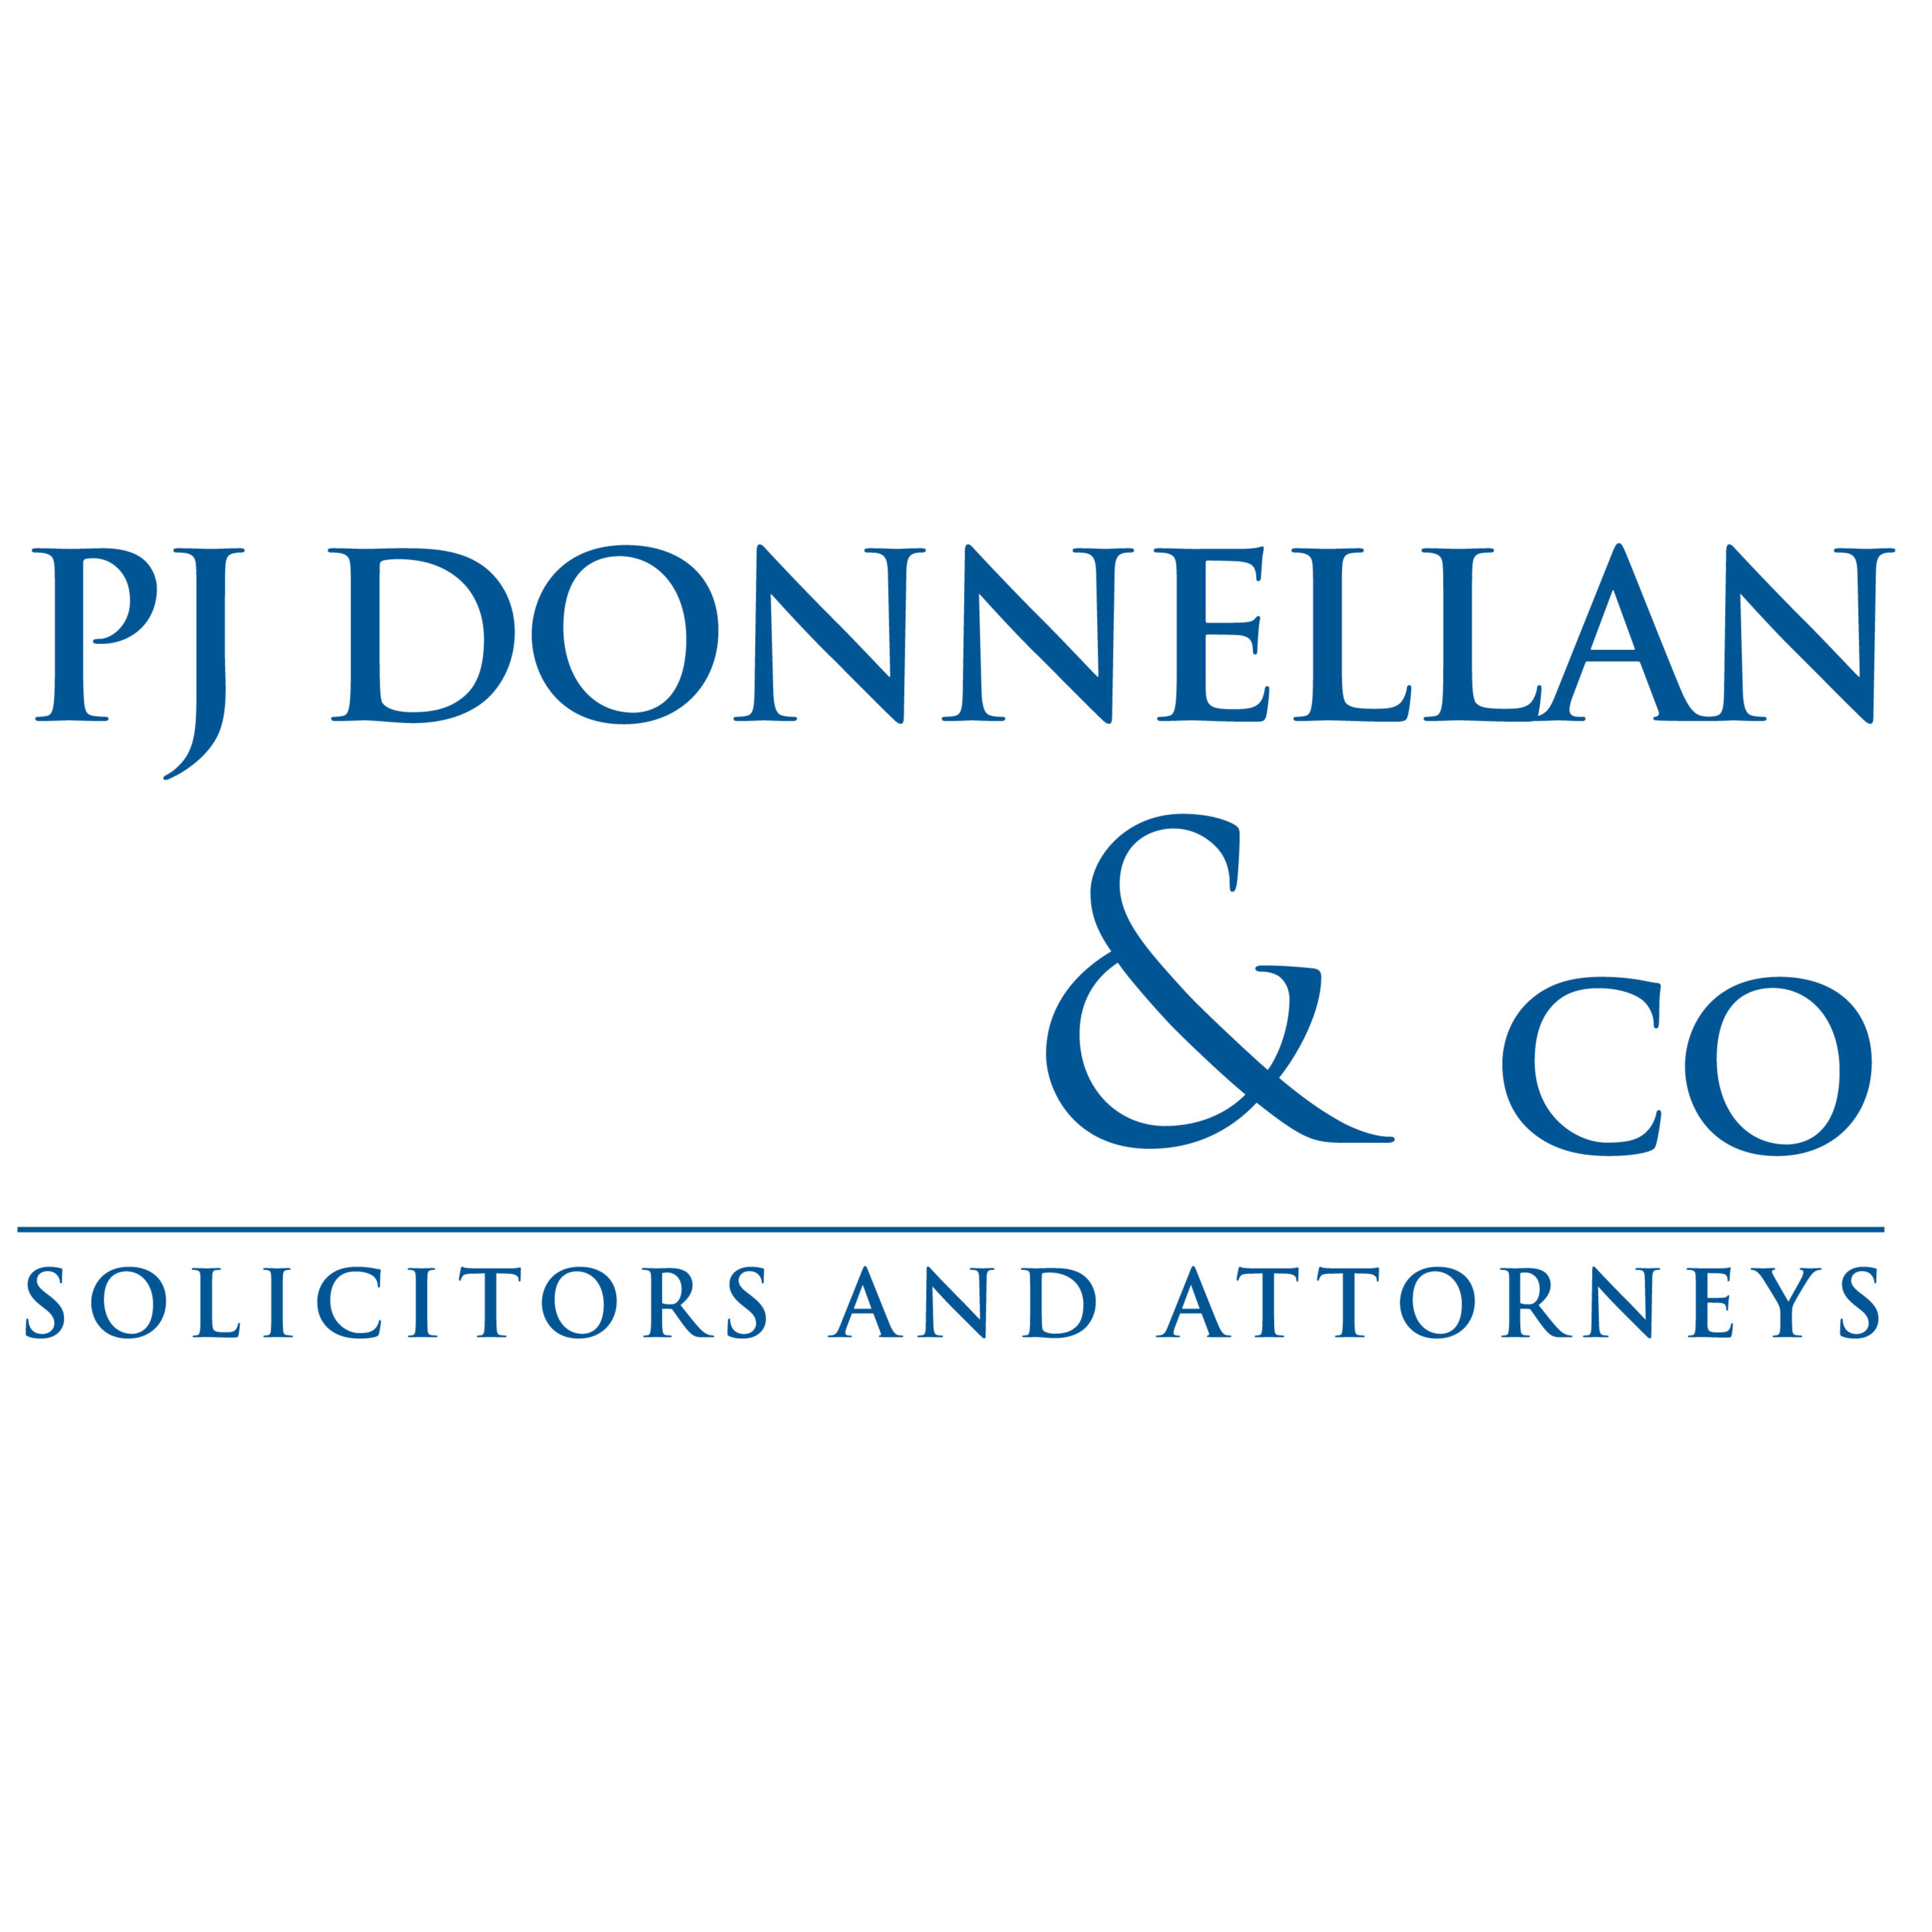 Legal Services  Wills  Estates Property Planning Development Conveyancing PJ Donnellan & Co Gosford (02) 4324 3988